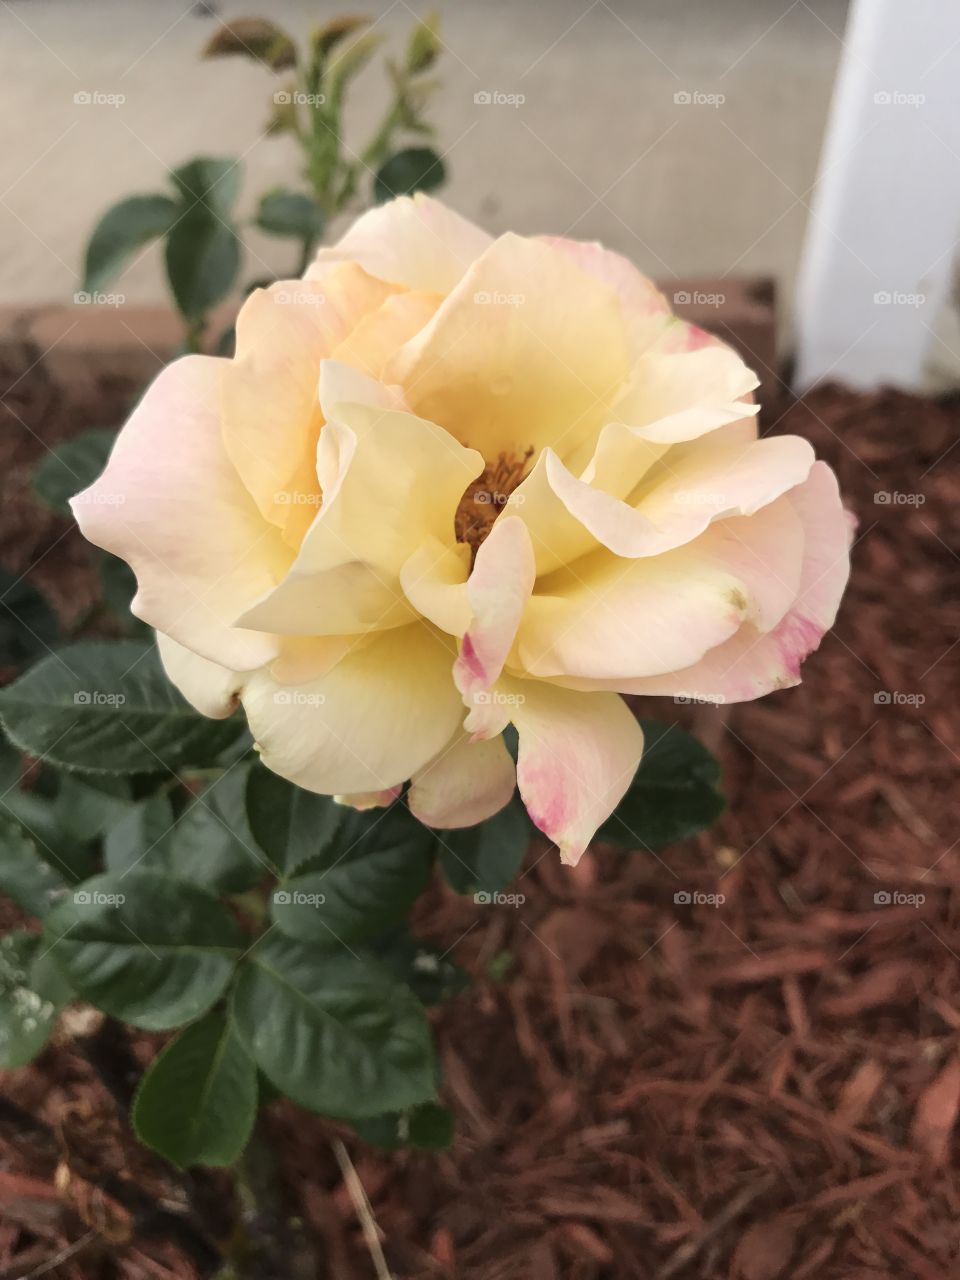 Hybrid rose